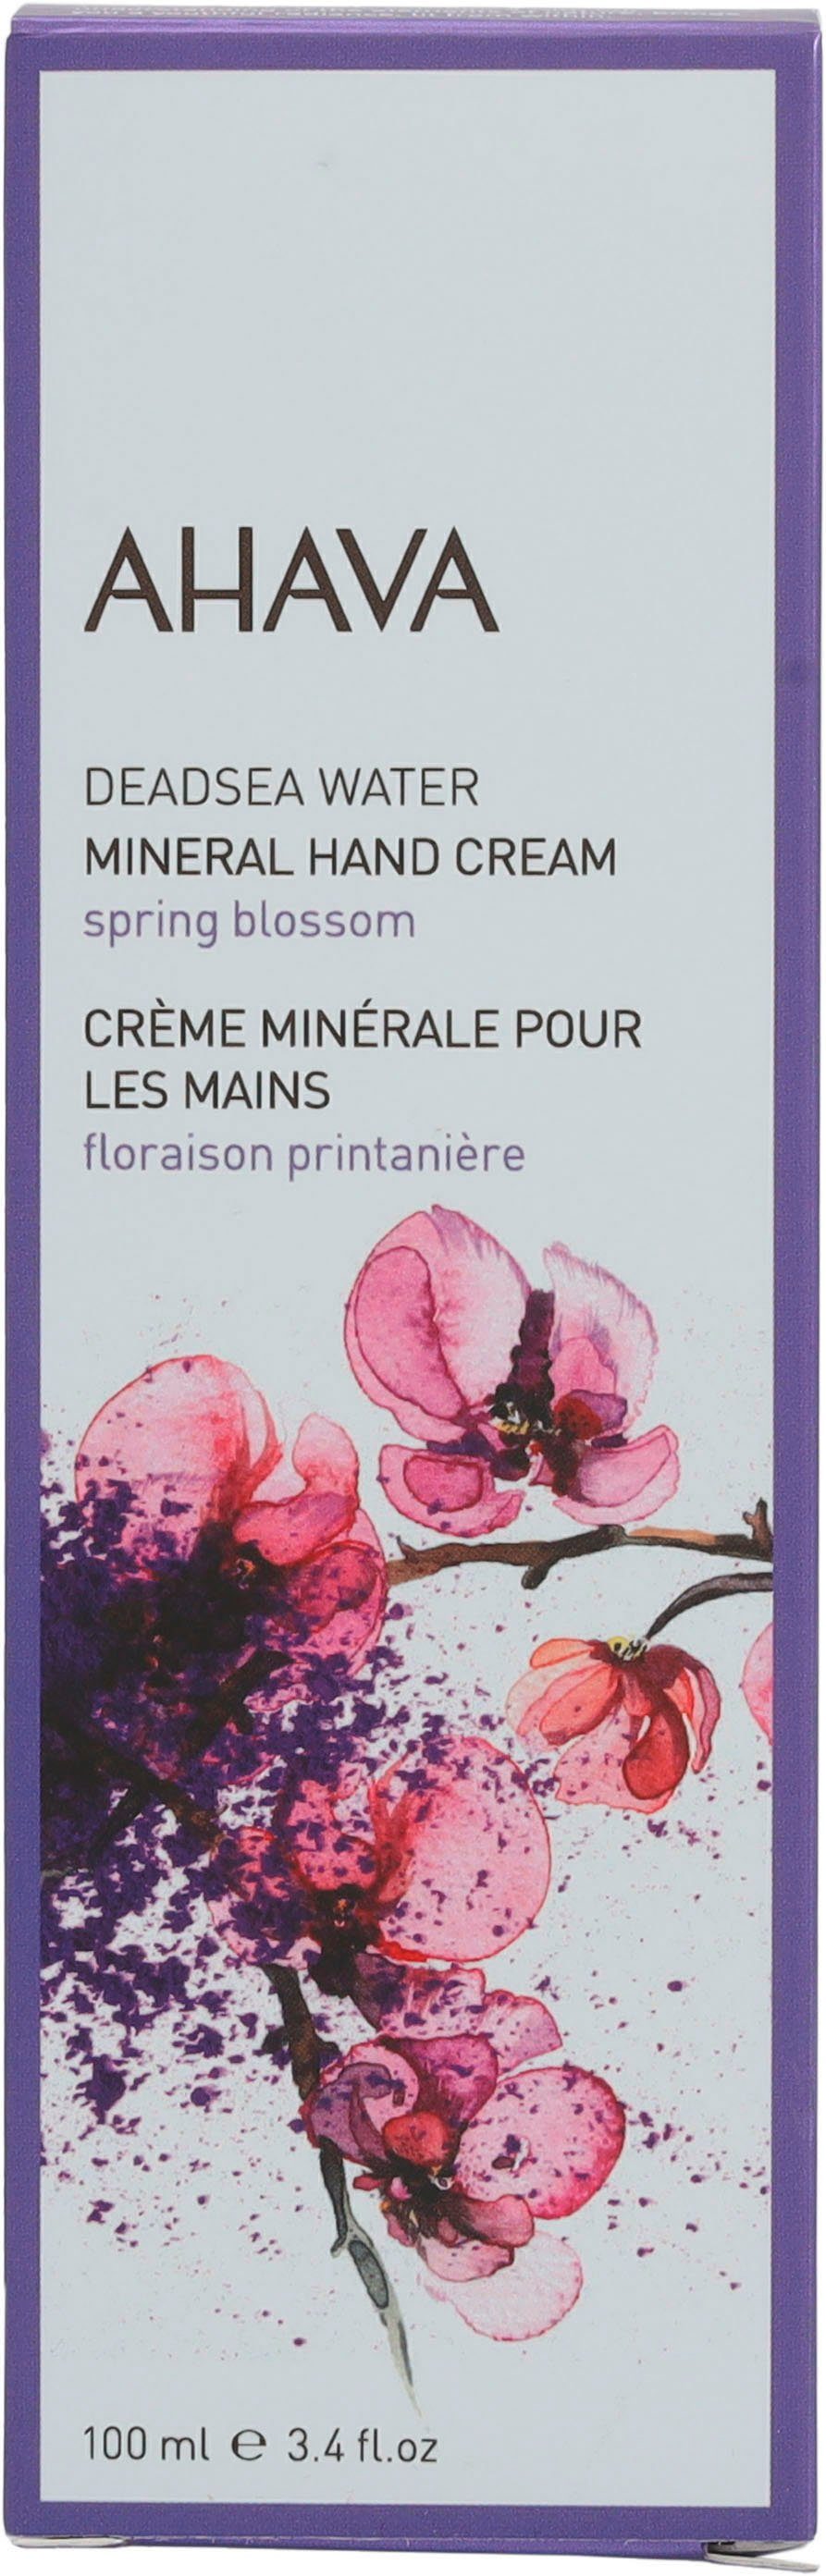 Blossom Deadsea Cream Spring Hand Handcreme Mineral Water AHAVA